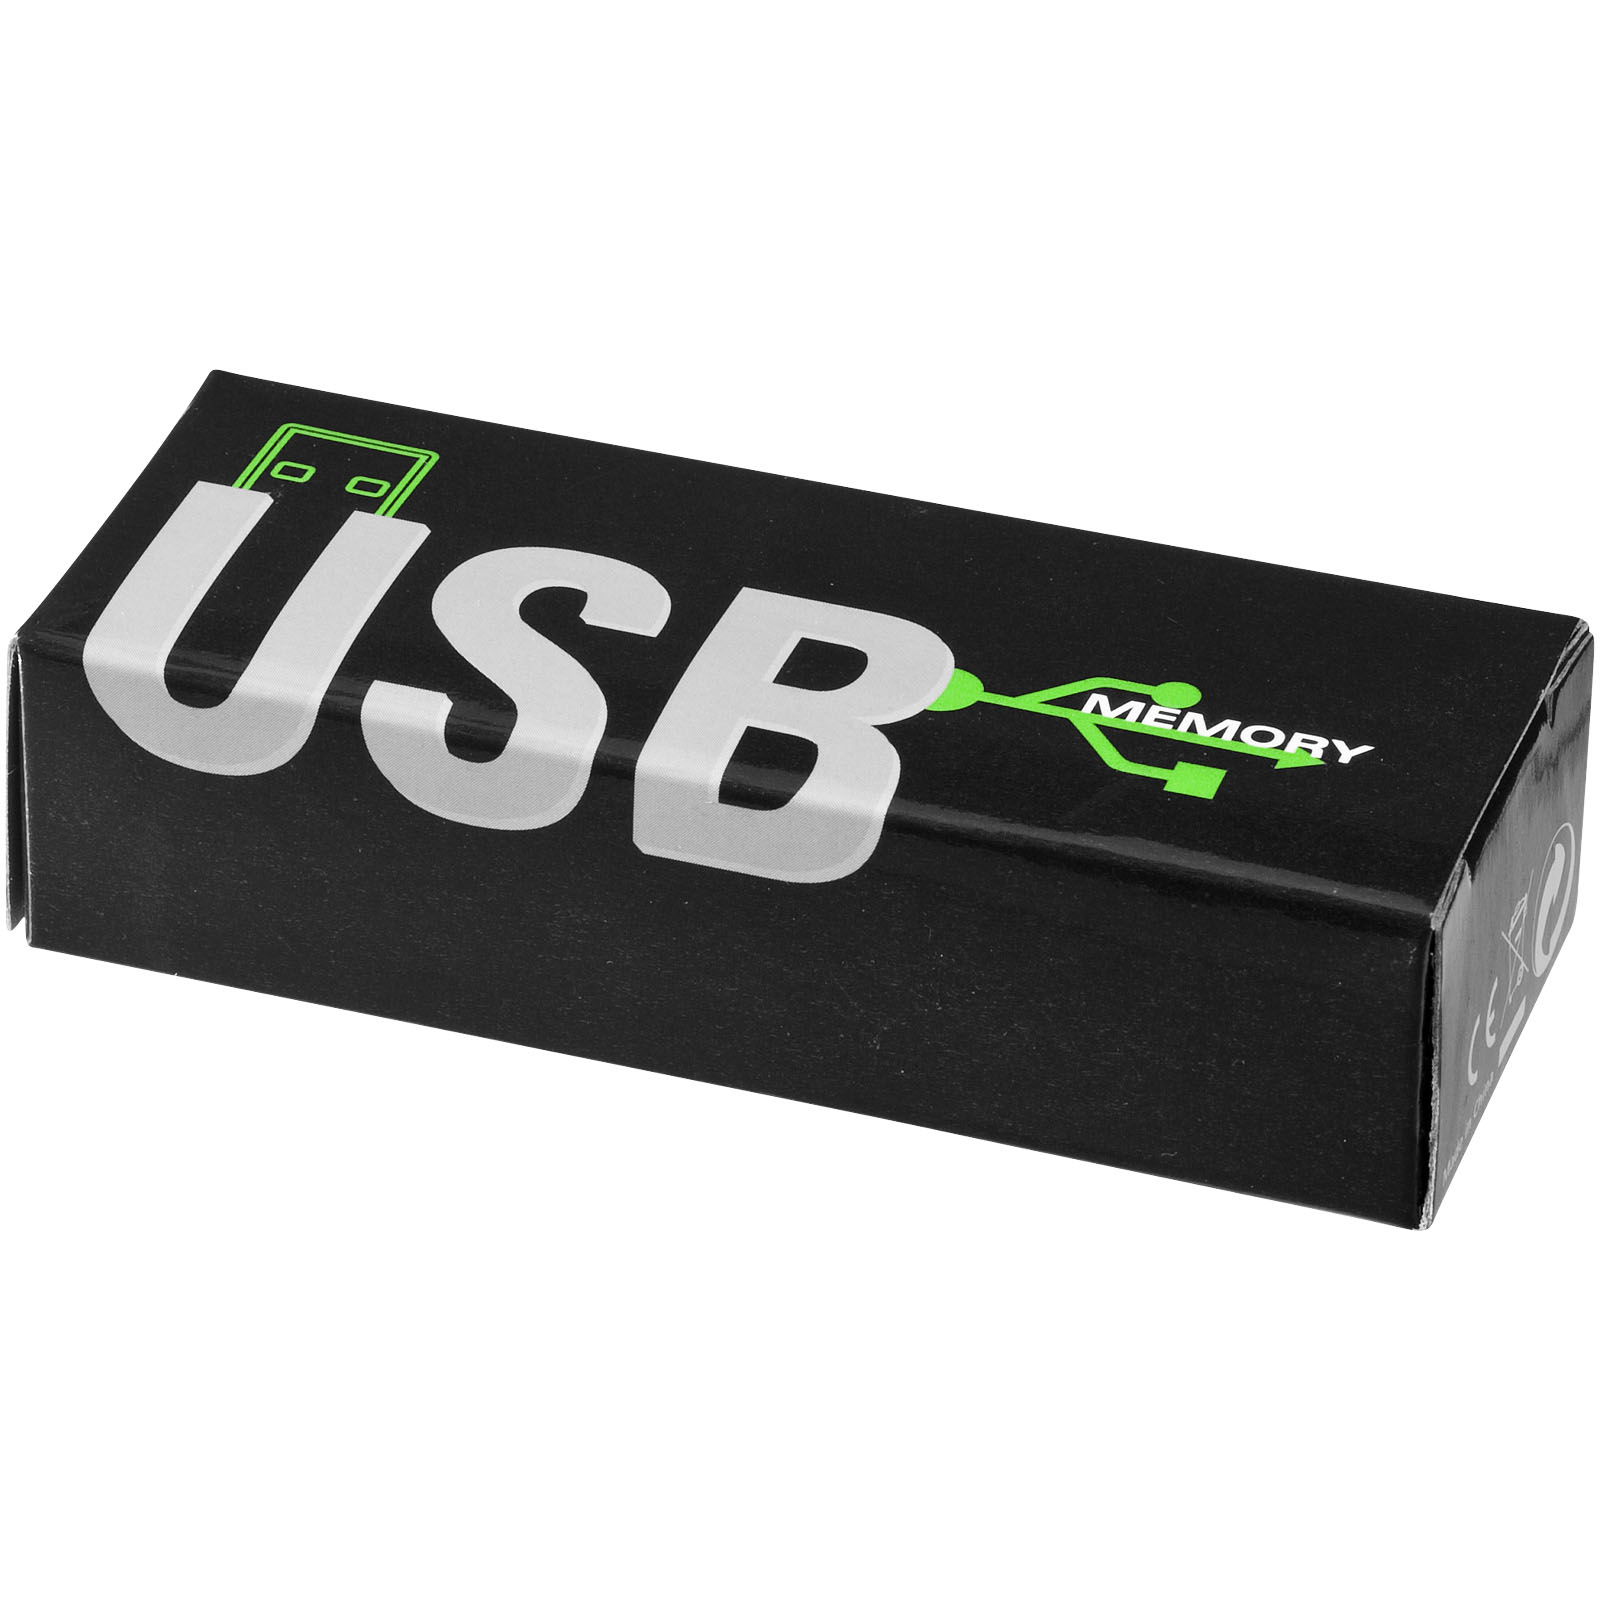 Advertising USB Flash Drives - Rotate-basic 16GB USB flash drive - 1